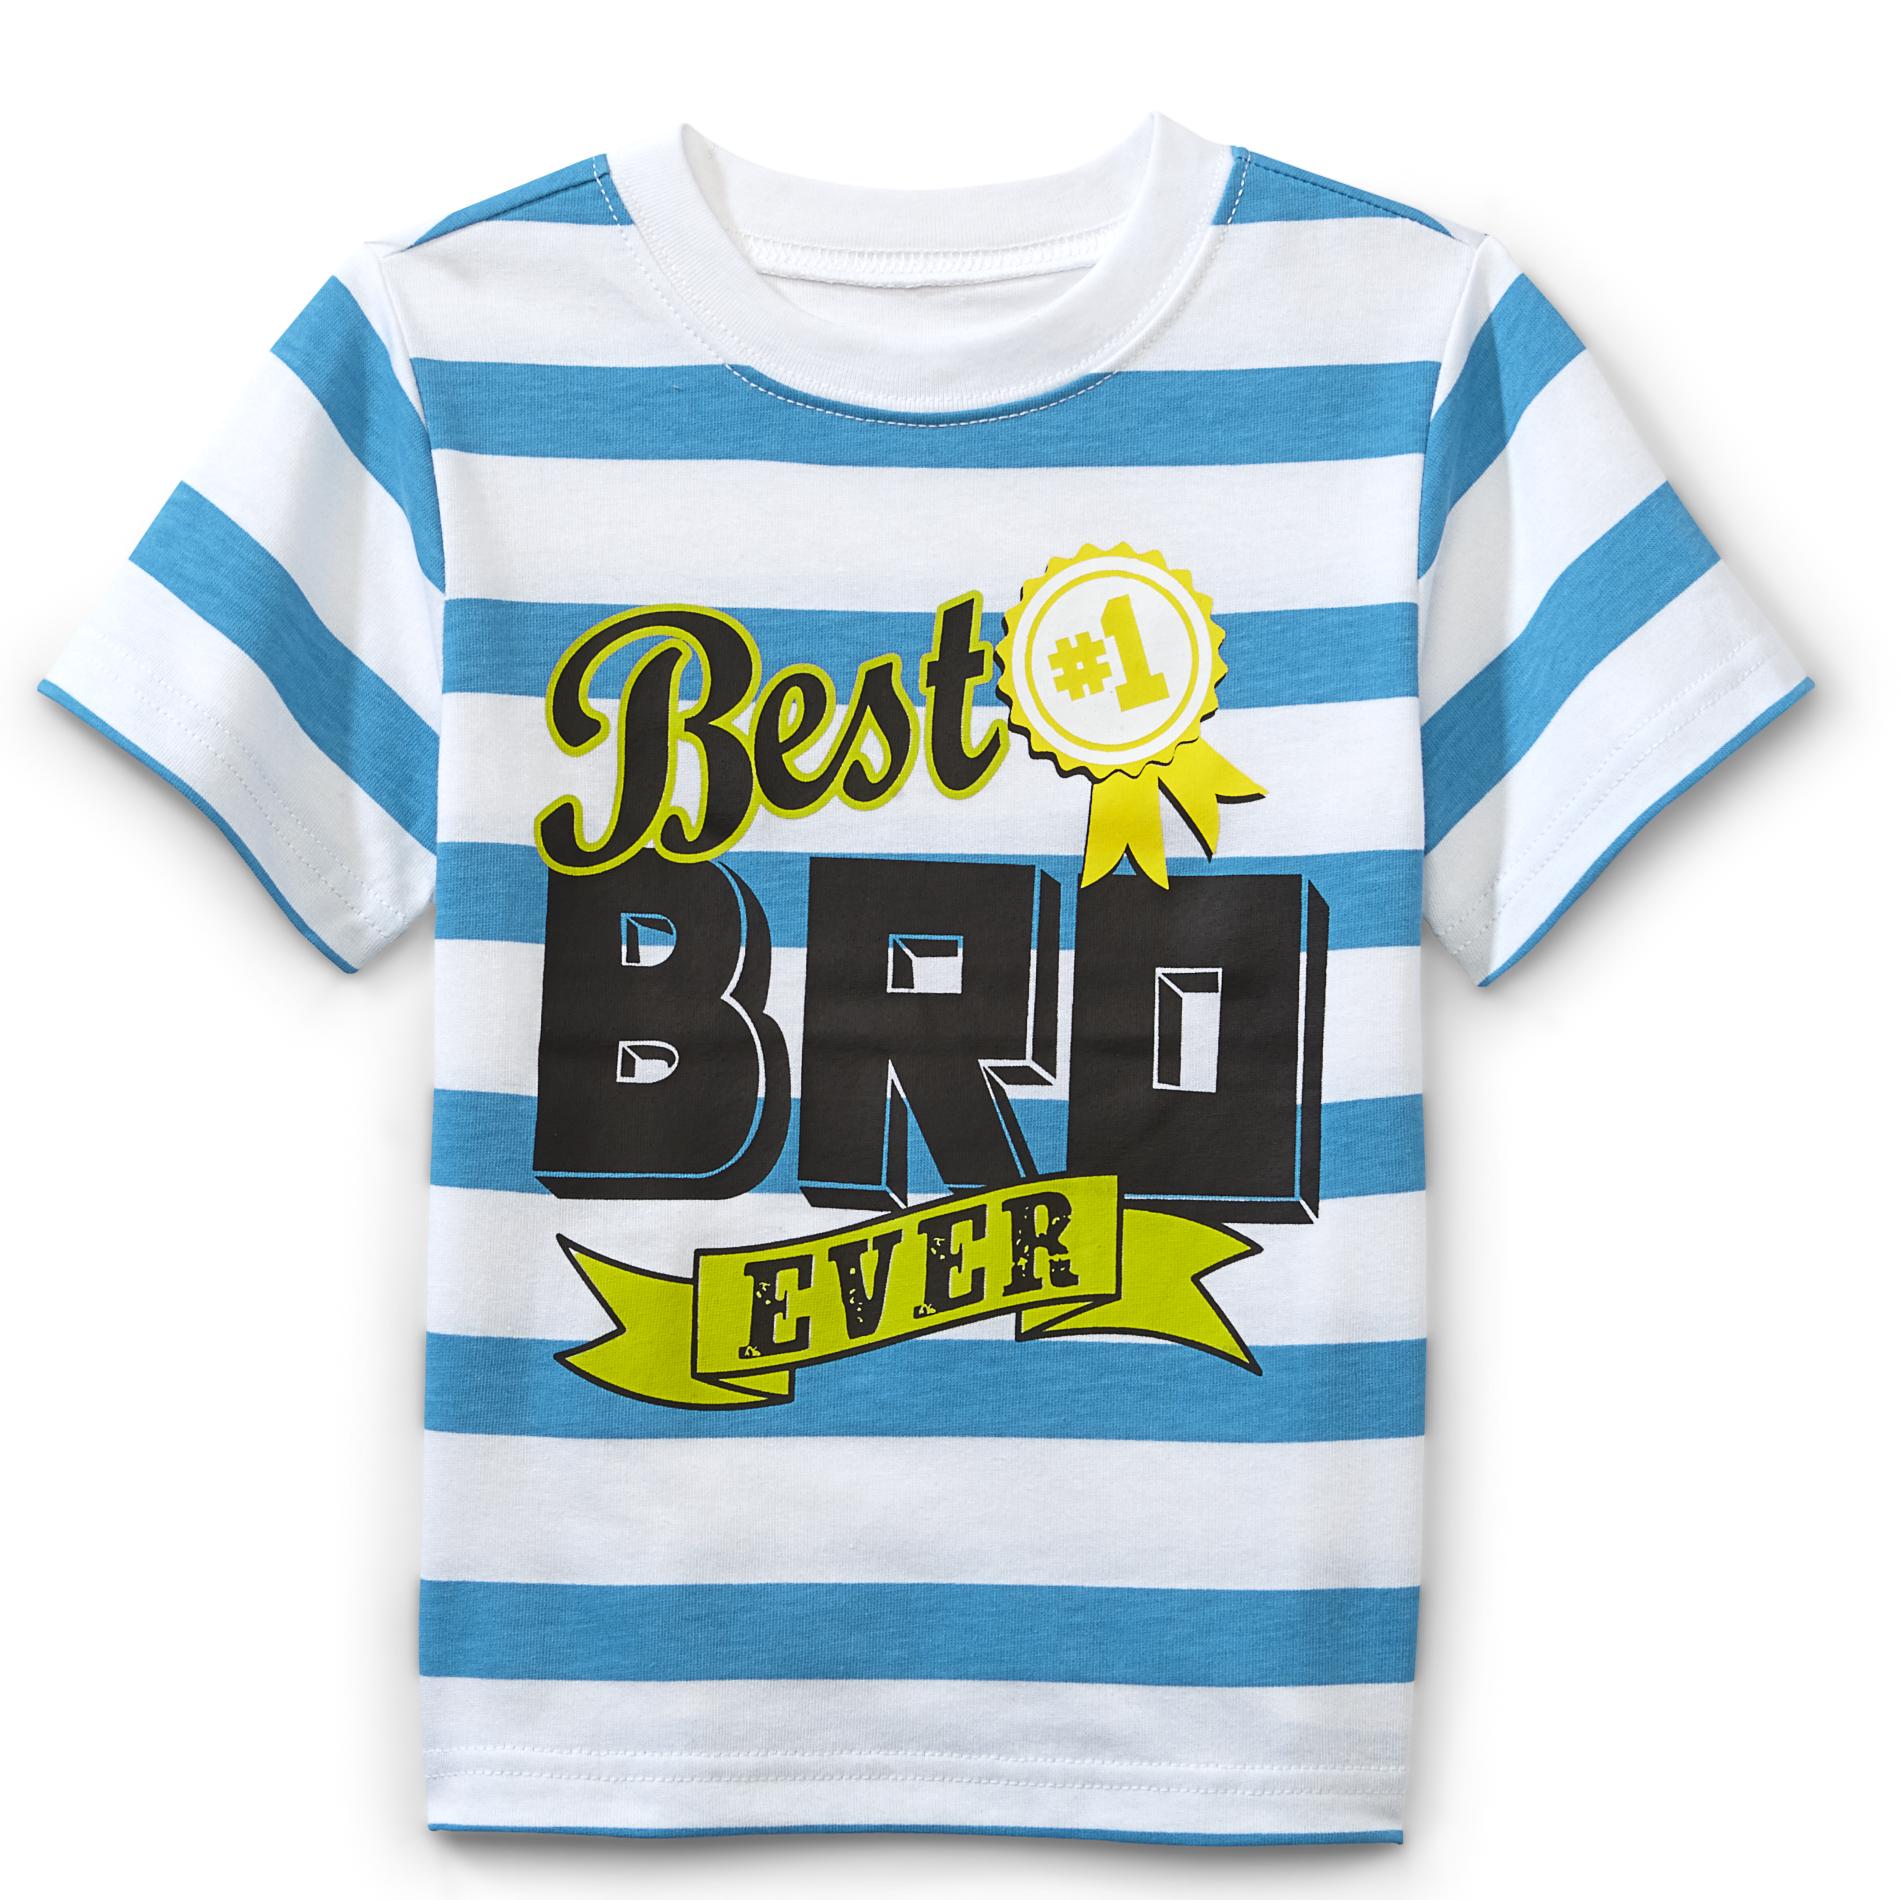 WonderKids Infant & Toddler Boy's Short-Sleeve Graphic T-Shirt - Best Bro Ever